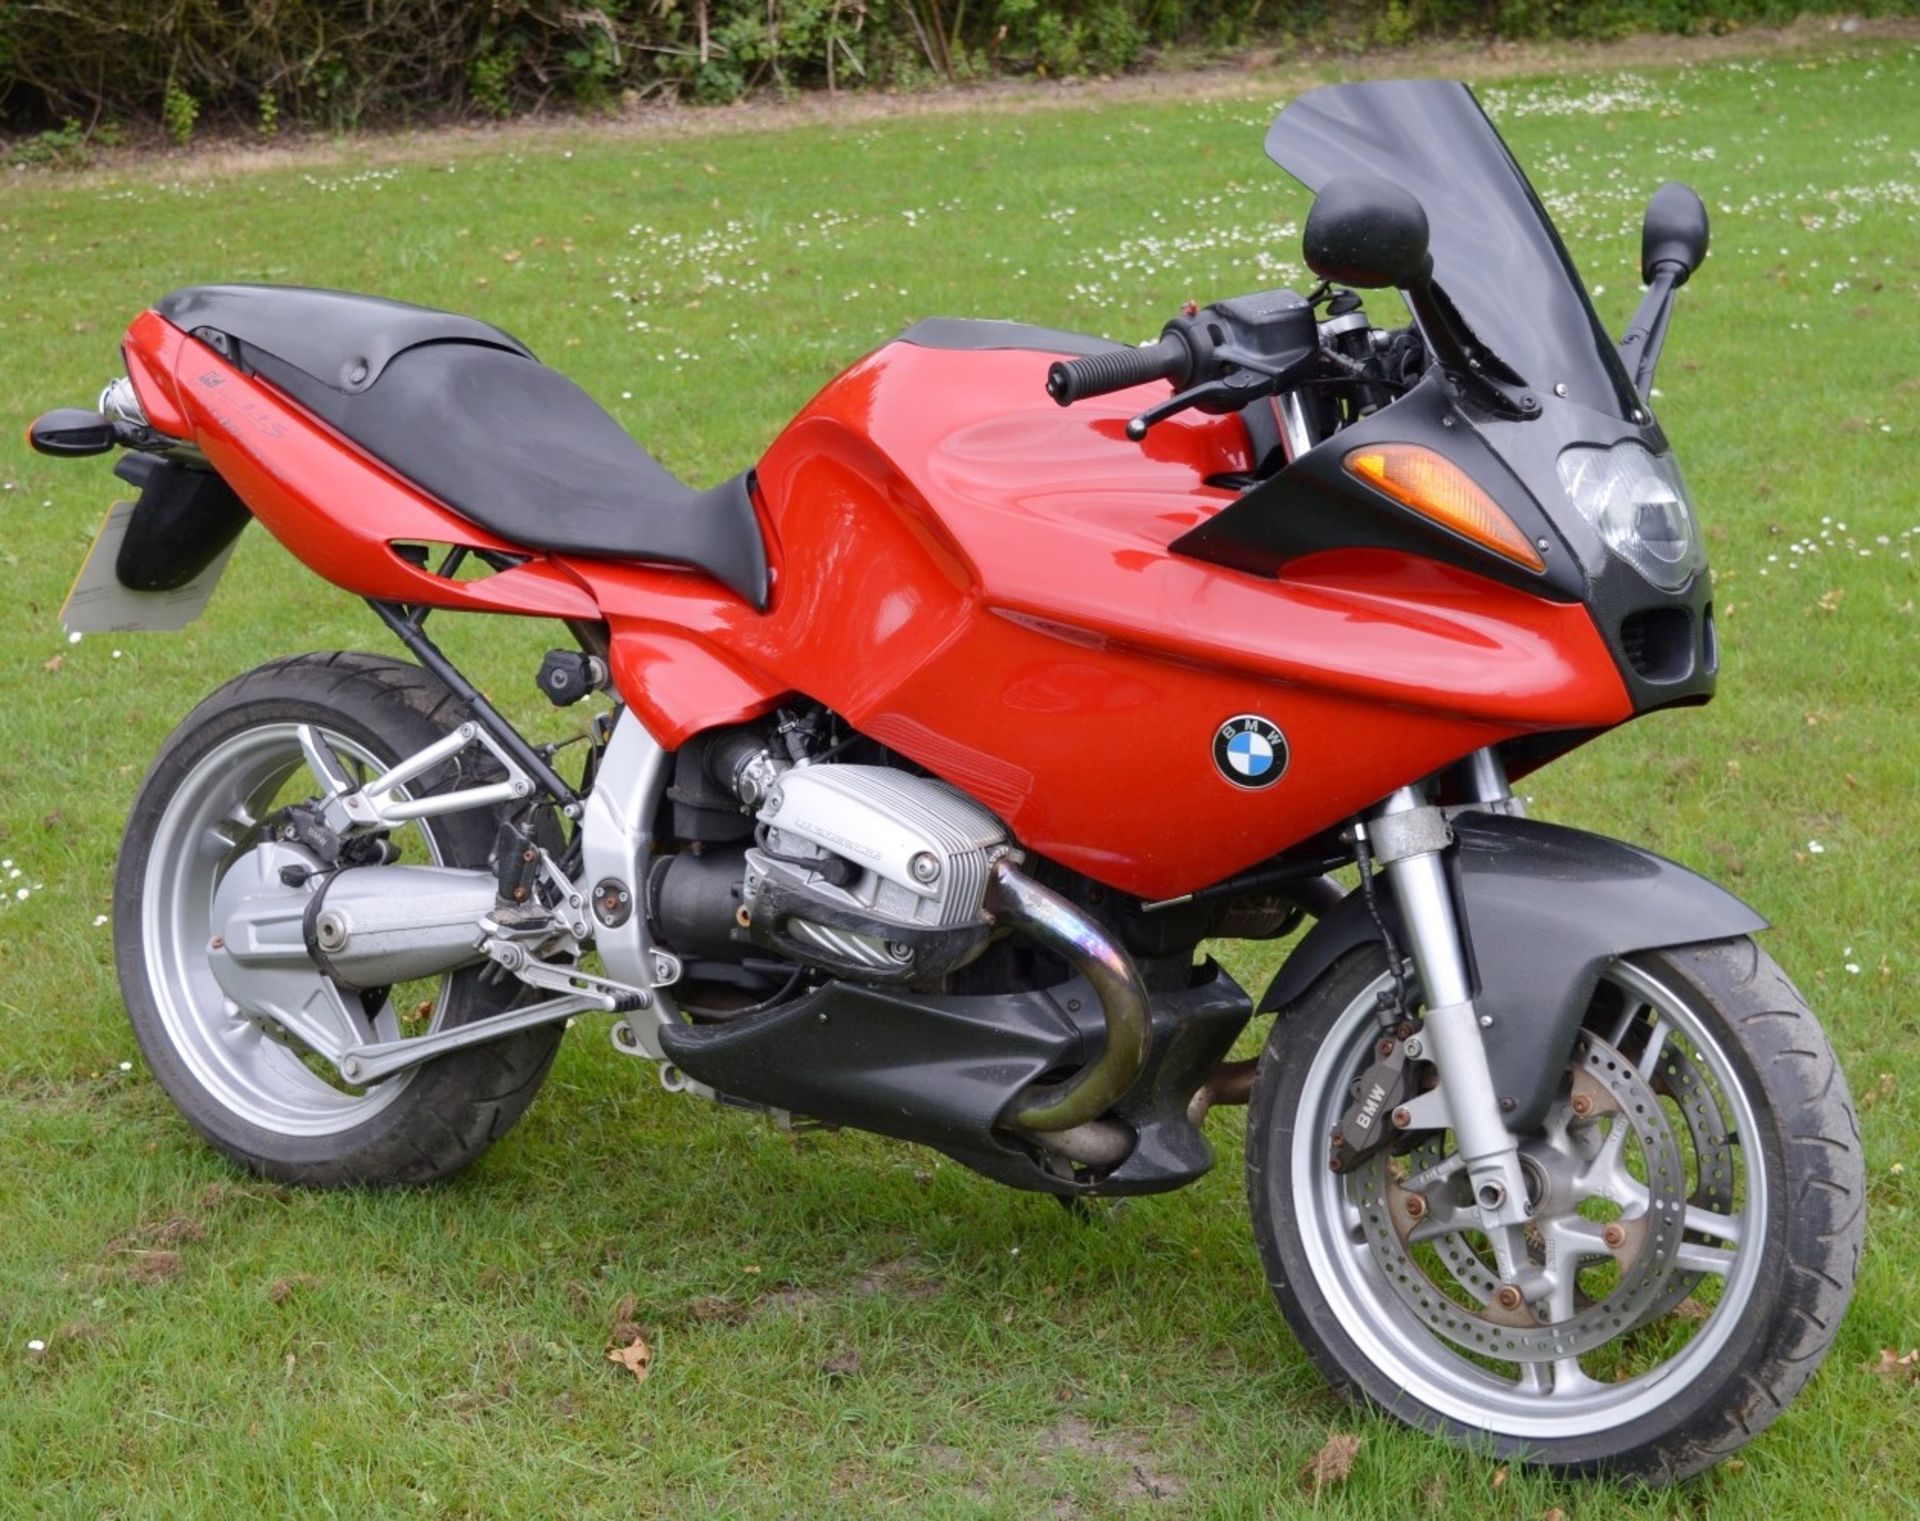 1 x BMW R1100S Motorcycle Bike - Year 2001 - 4,487 Miles - MOT Expires May 2018